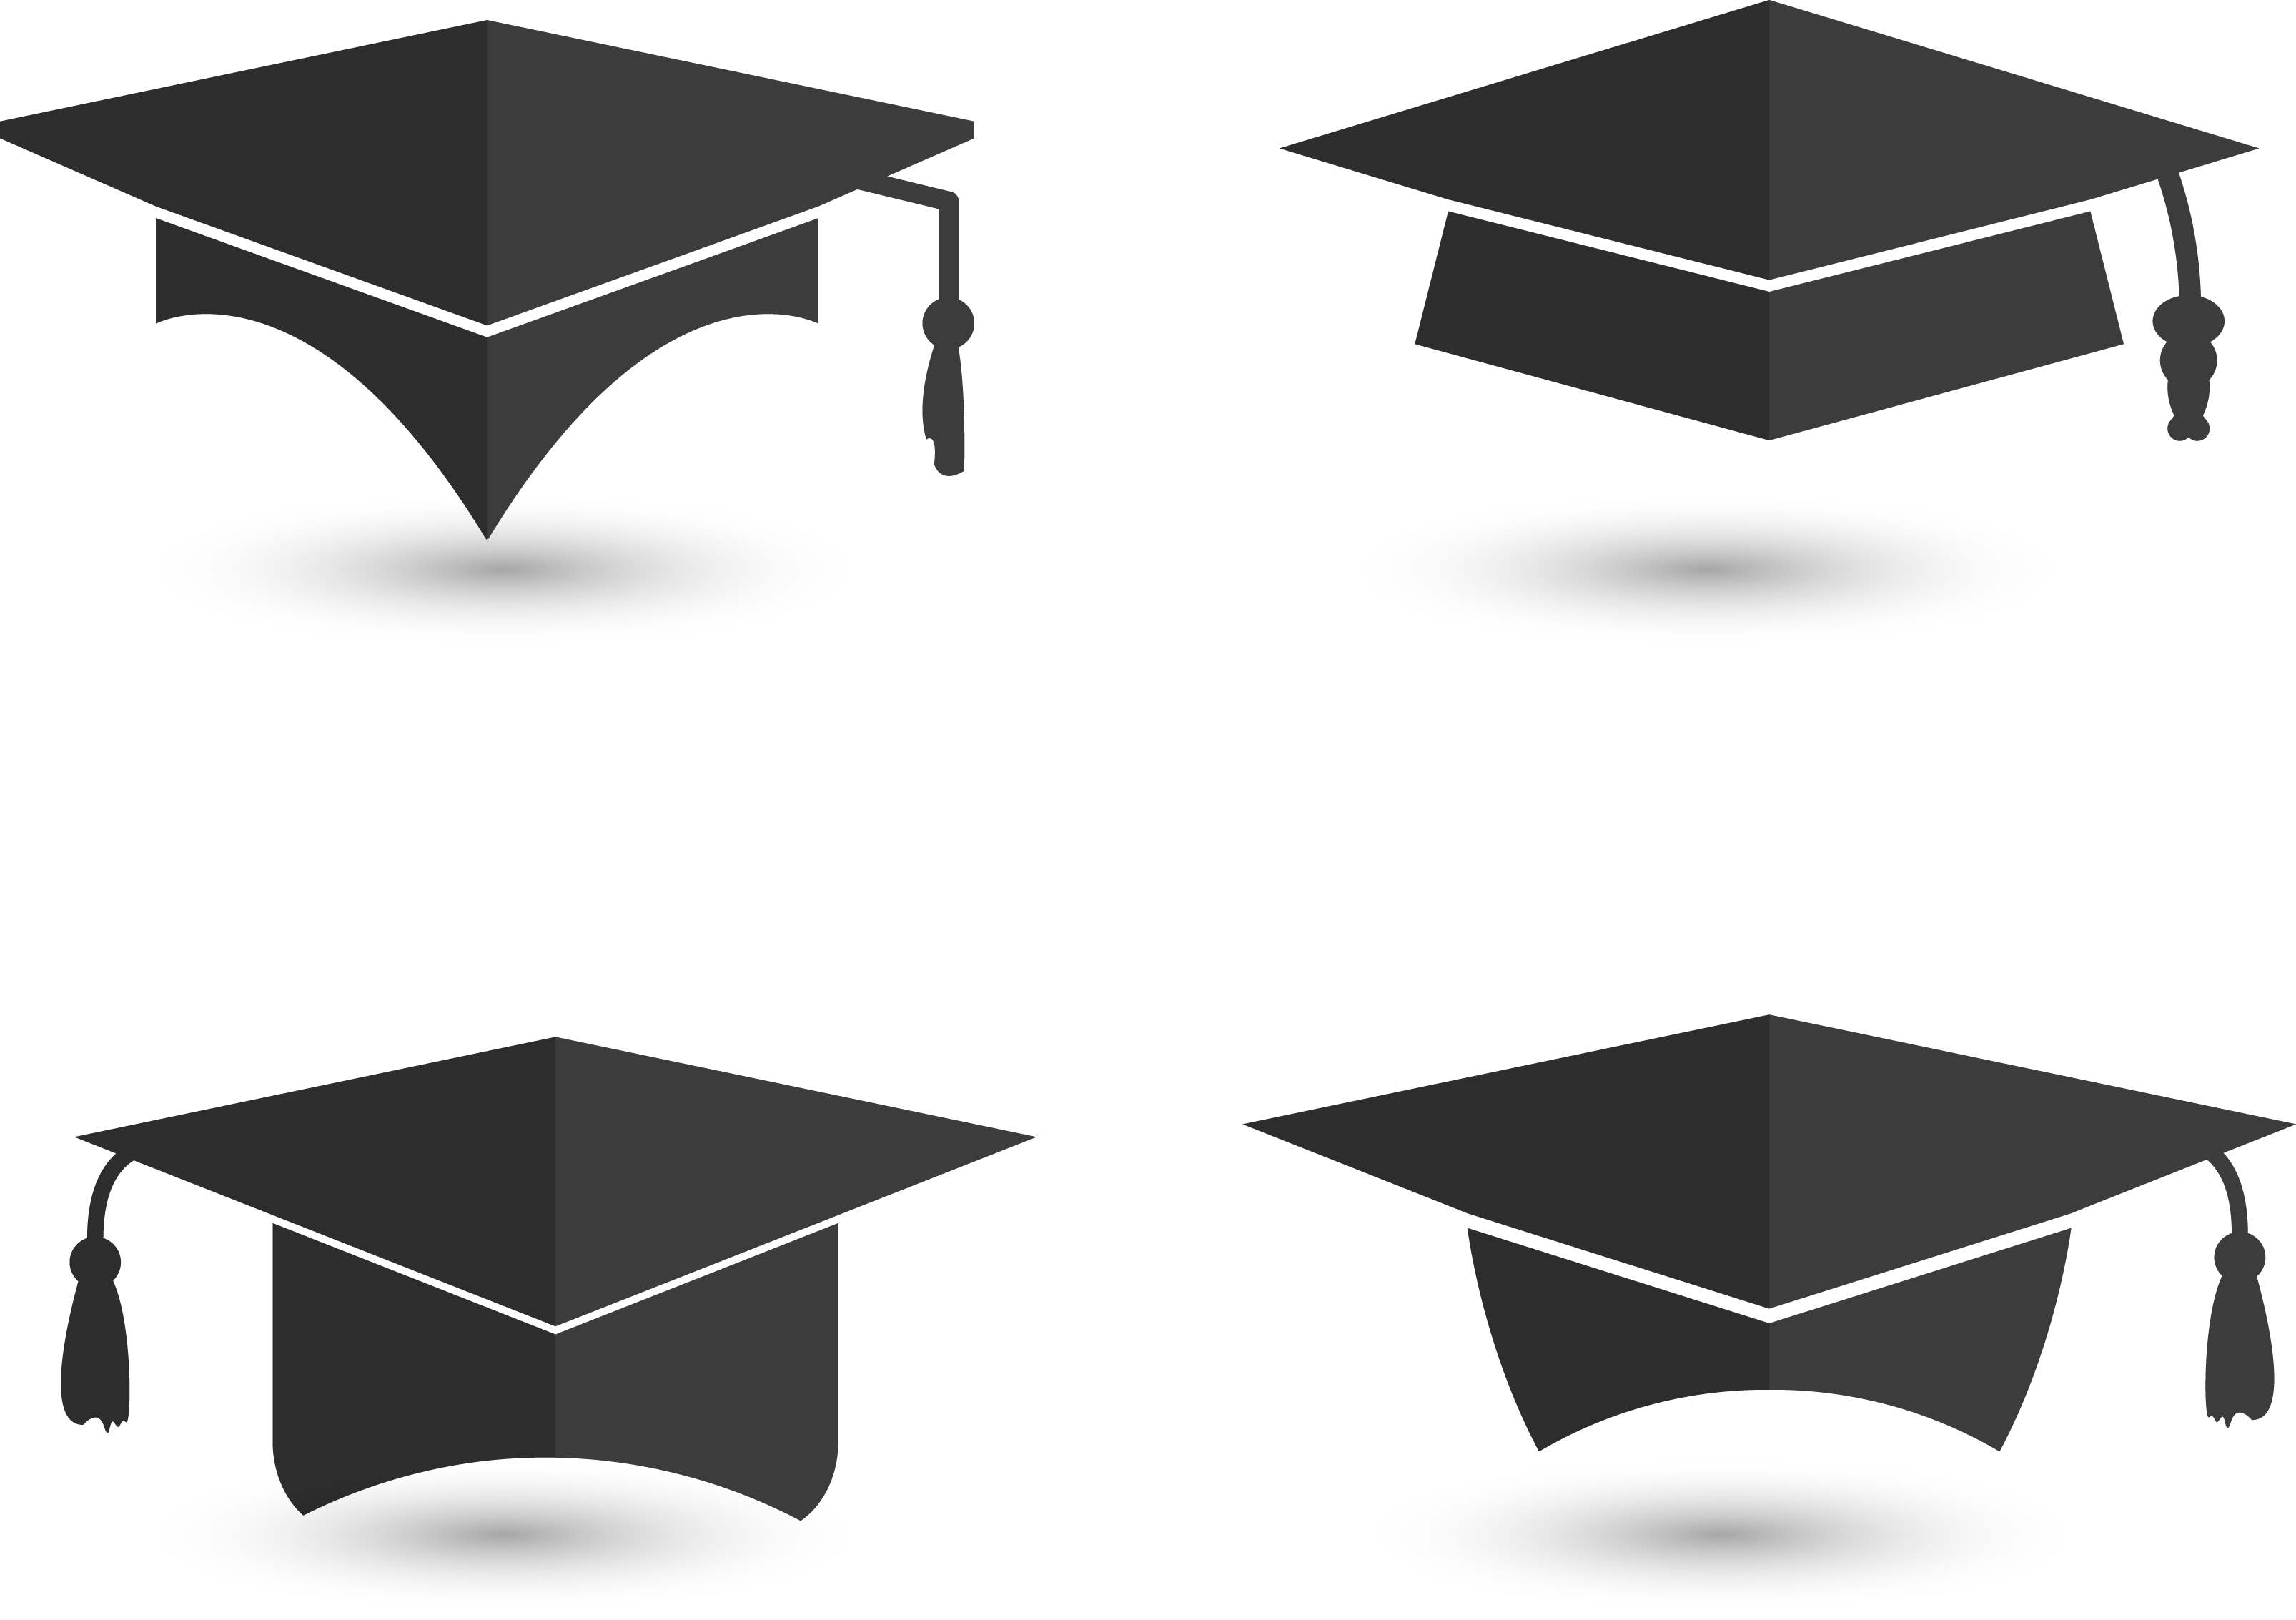 Ceremony square academic euclidean. Graduation cap vector png